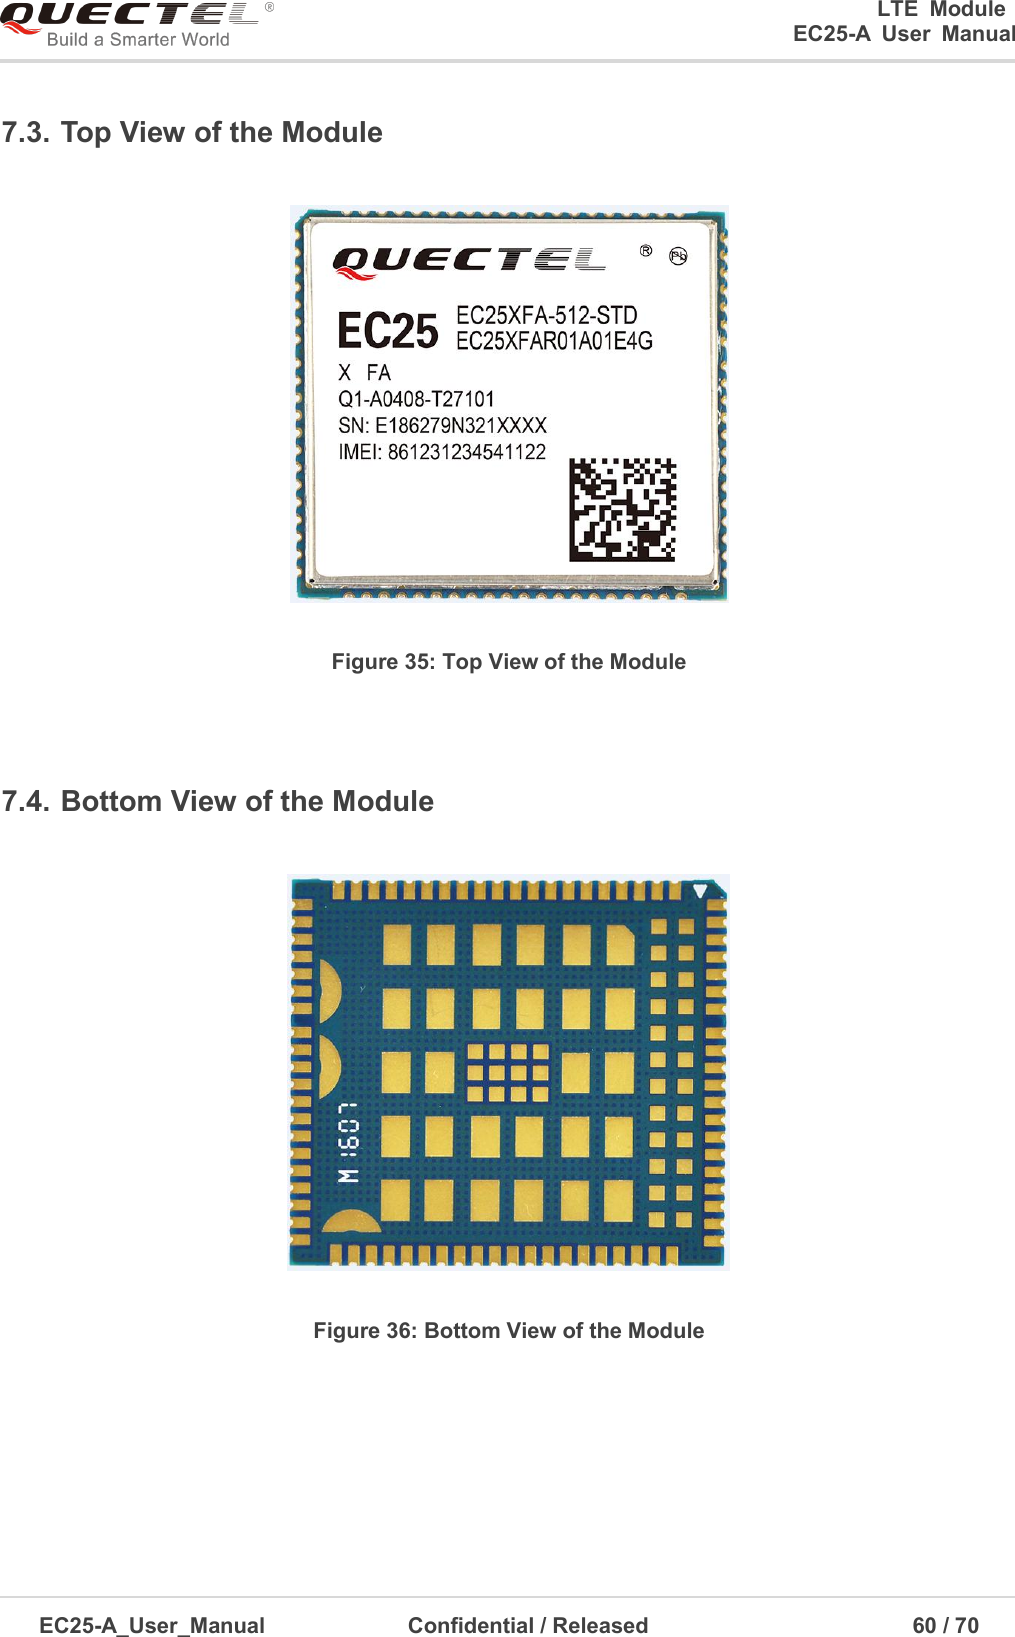 0                                                                       LTE  Module                                                    EC25-A  User  Manual  EC25-A_User_Manual               Confidential / Released                                            60 / 7      7.3. Top View of the Module  Figure 35: Top View of the Module  7.4. Bottom View of the Module  Figure 36: Bottom View of the Module      